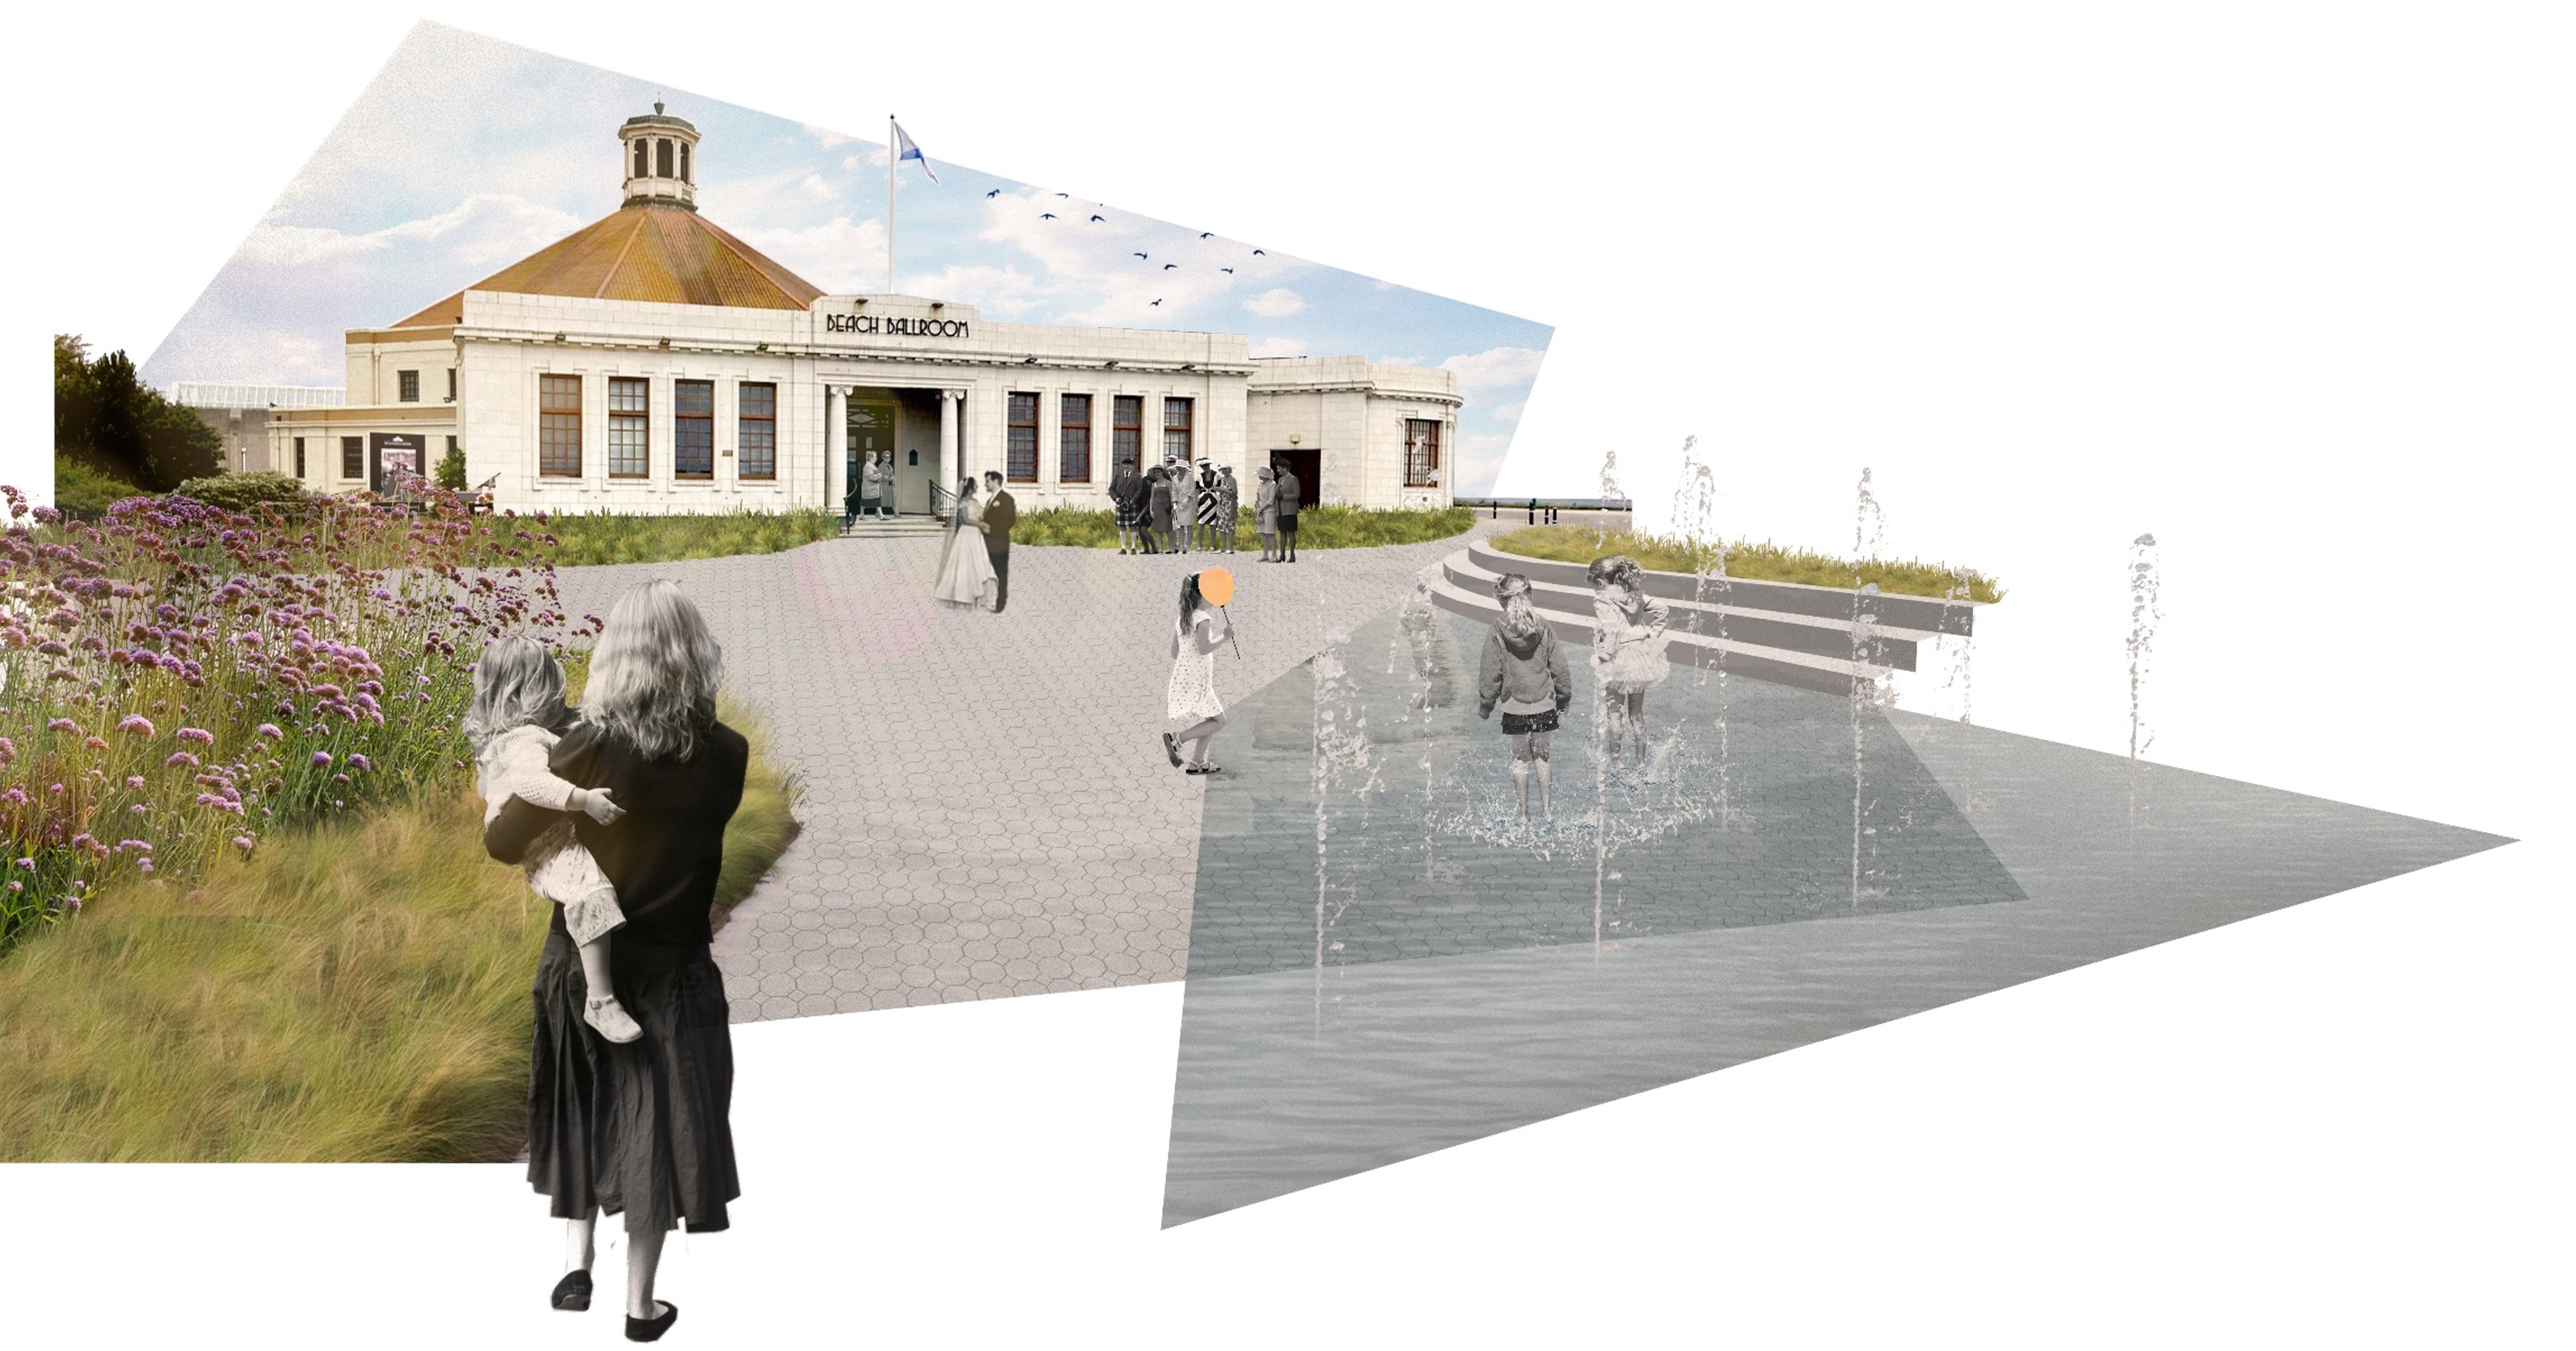 Aberdeen beach masterplan moves to detailed design stage